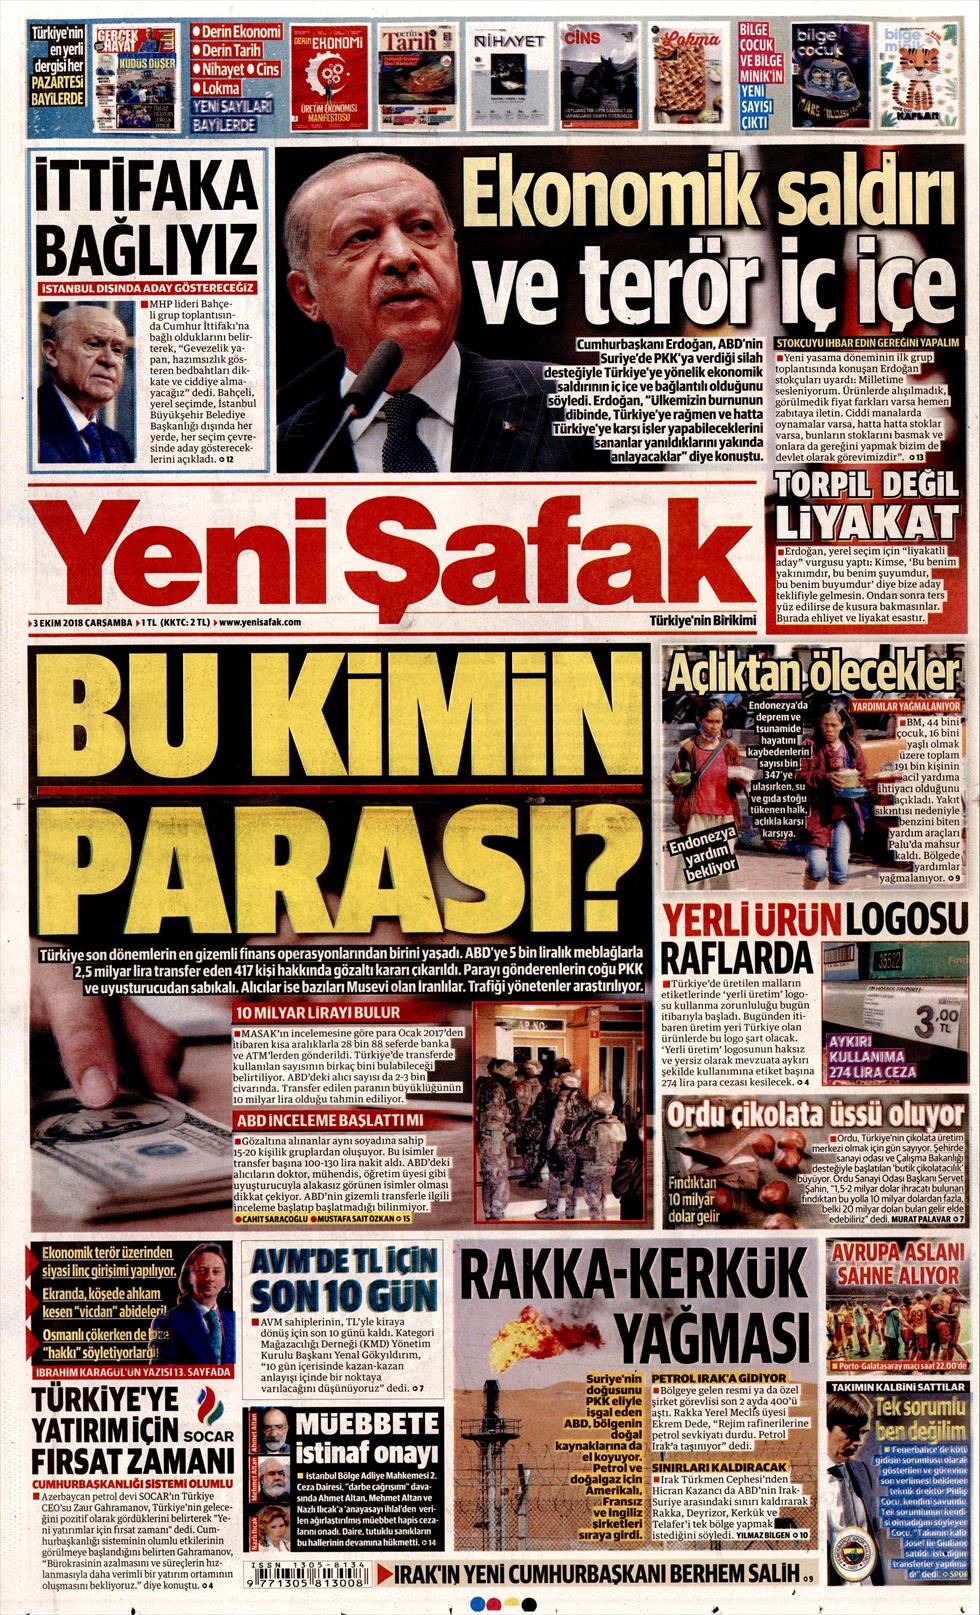 /data/newspapers/yeni-safak.jpg